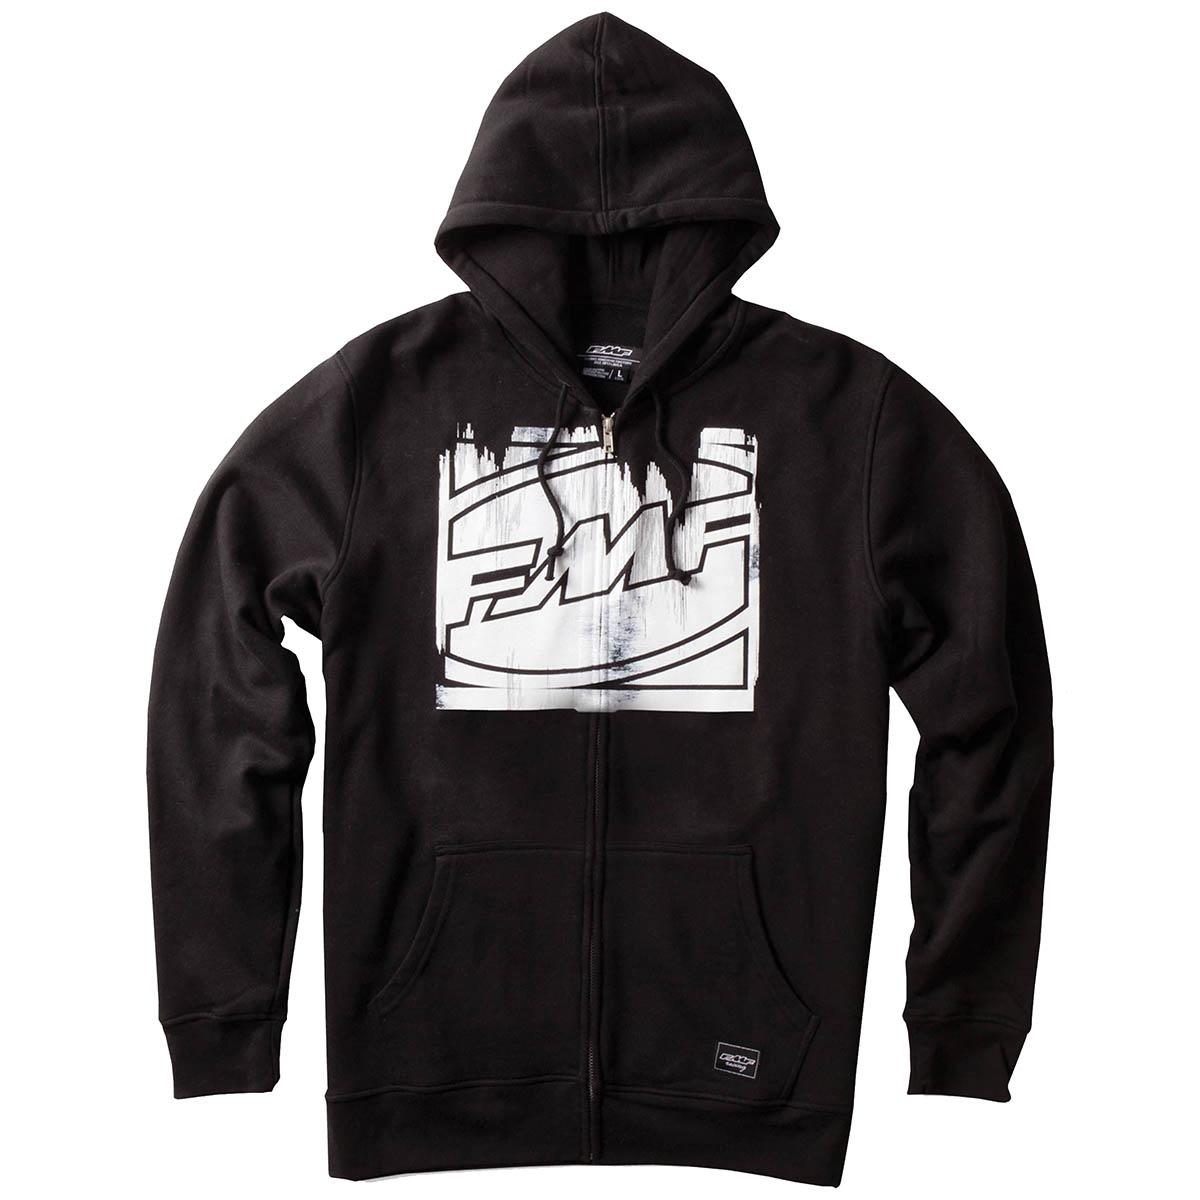 Fmf apparel zeroxed zip-up hoodie motorcycle sweatshirts